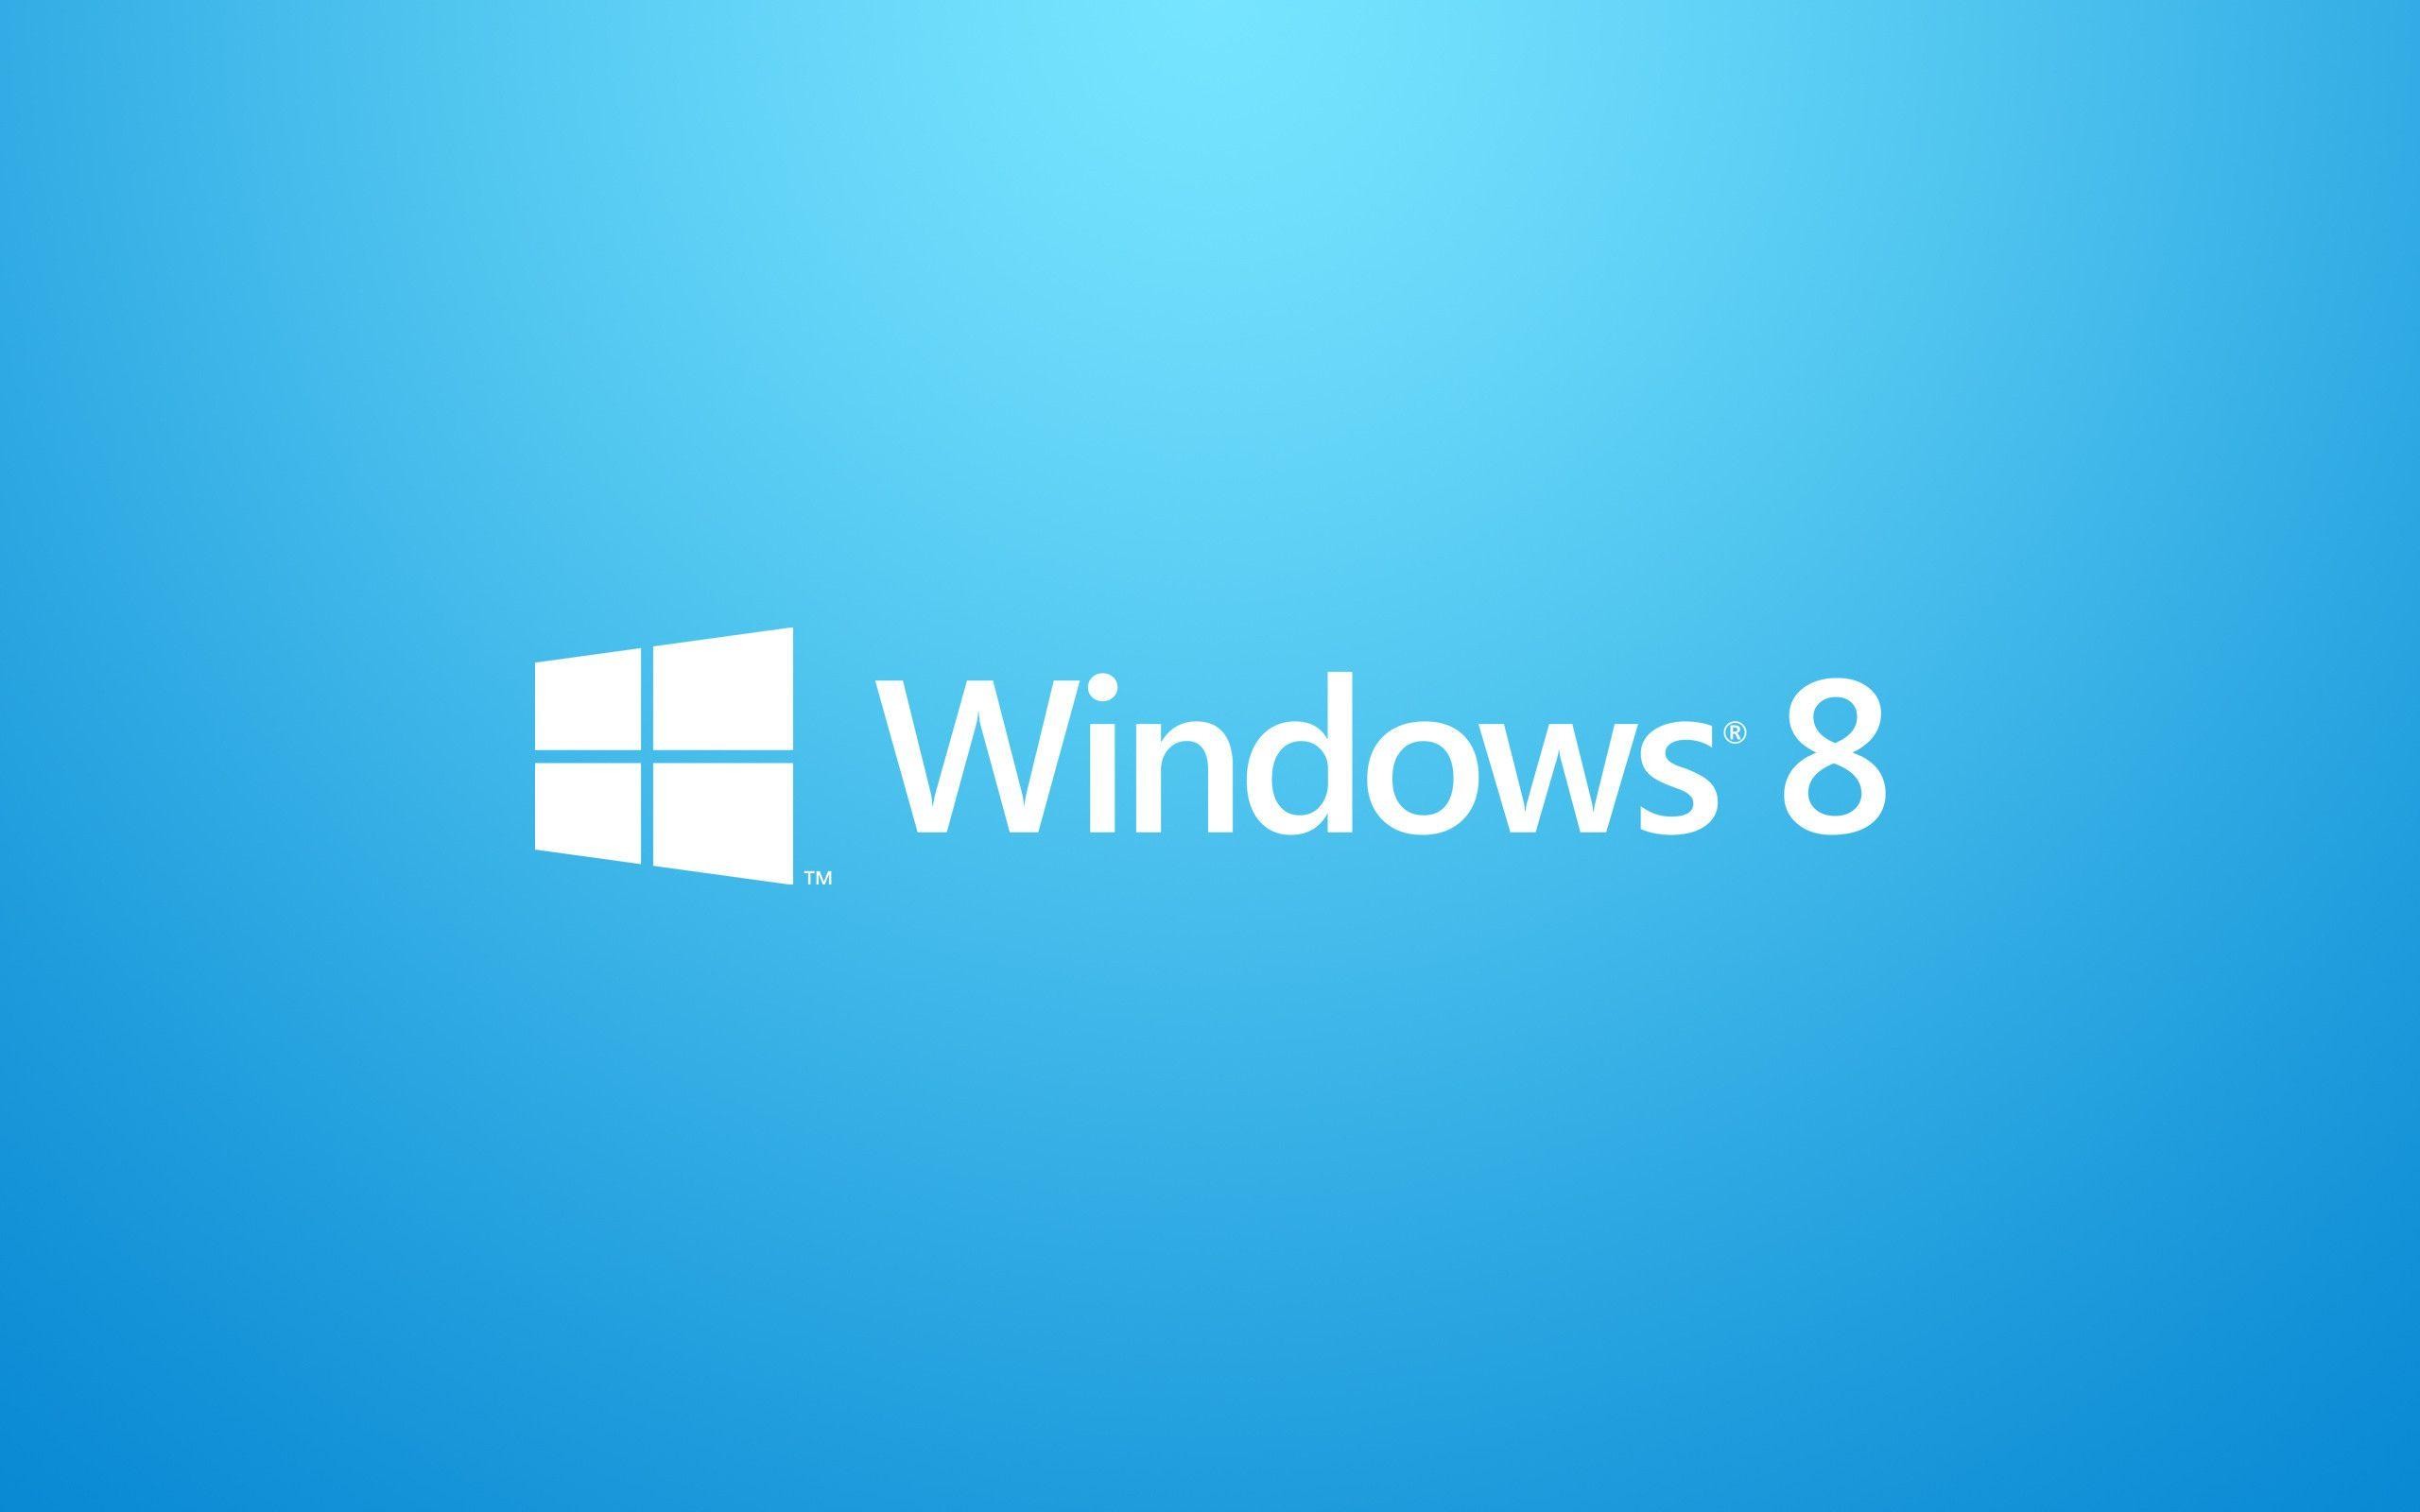 2560x1600 Windows 8 Wallpaper Pack_3 by sagorpirbd on DeviantArt